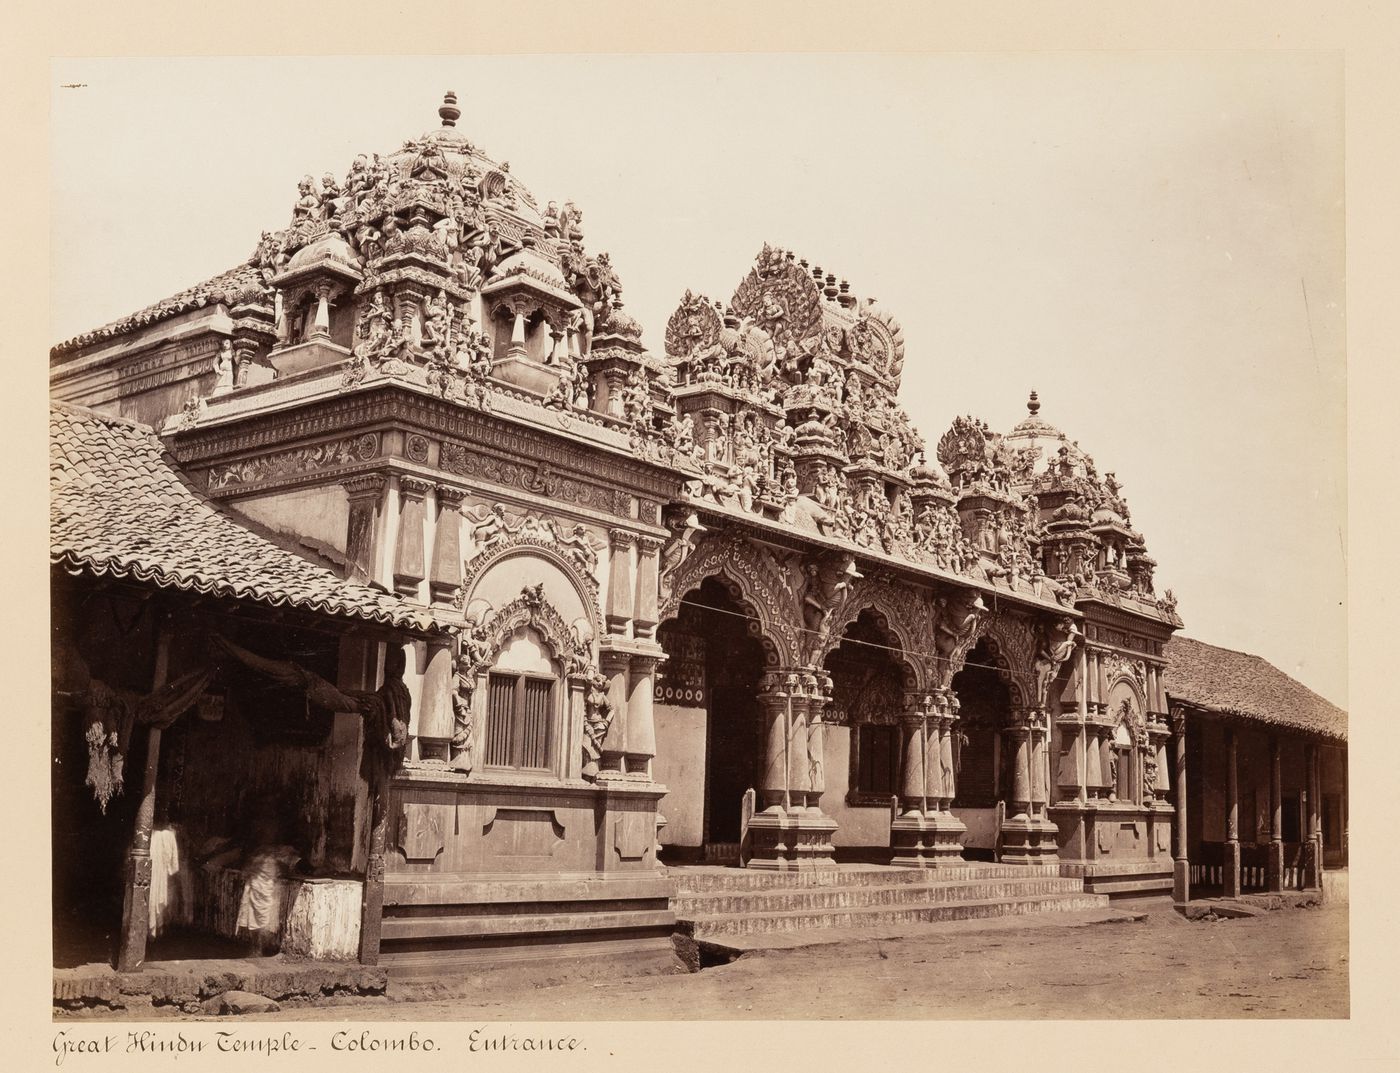 View of a Hindu temple, Pettah, Colombo, Ceylon (now Sri Lanka)